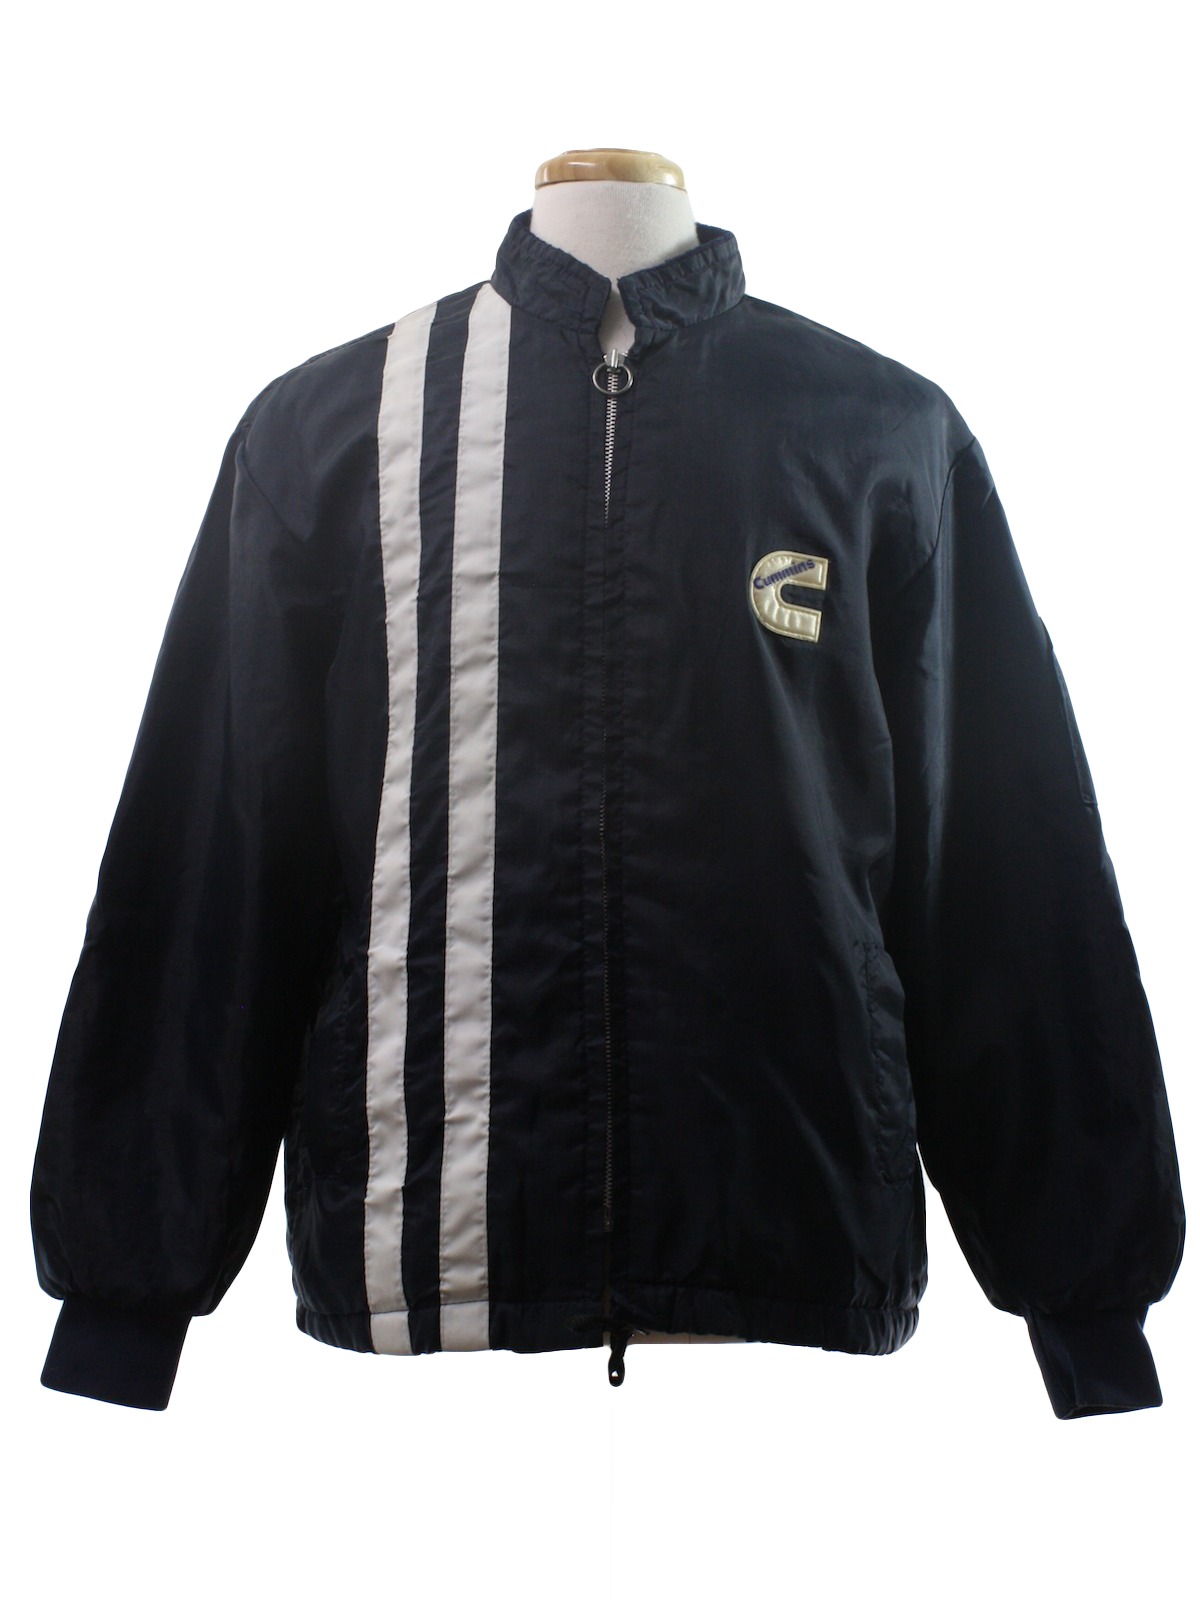 Retro Eighties Jacket: 80s -Unreadable Label- Mens navy blue background ...